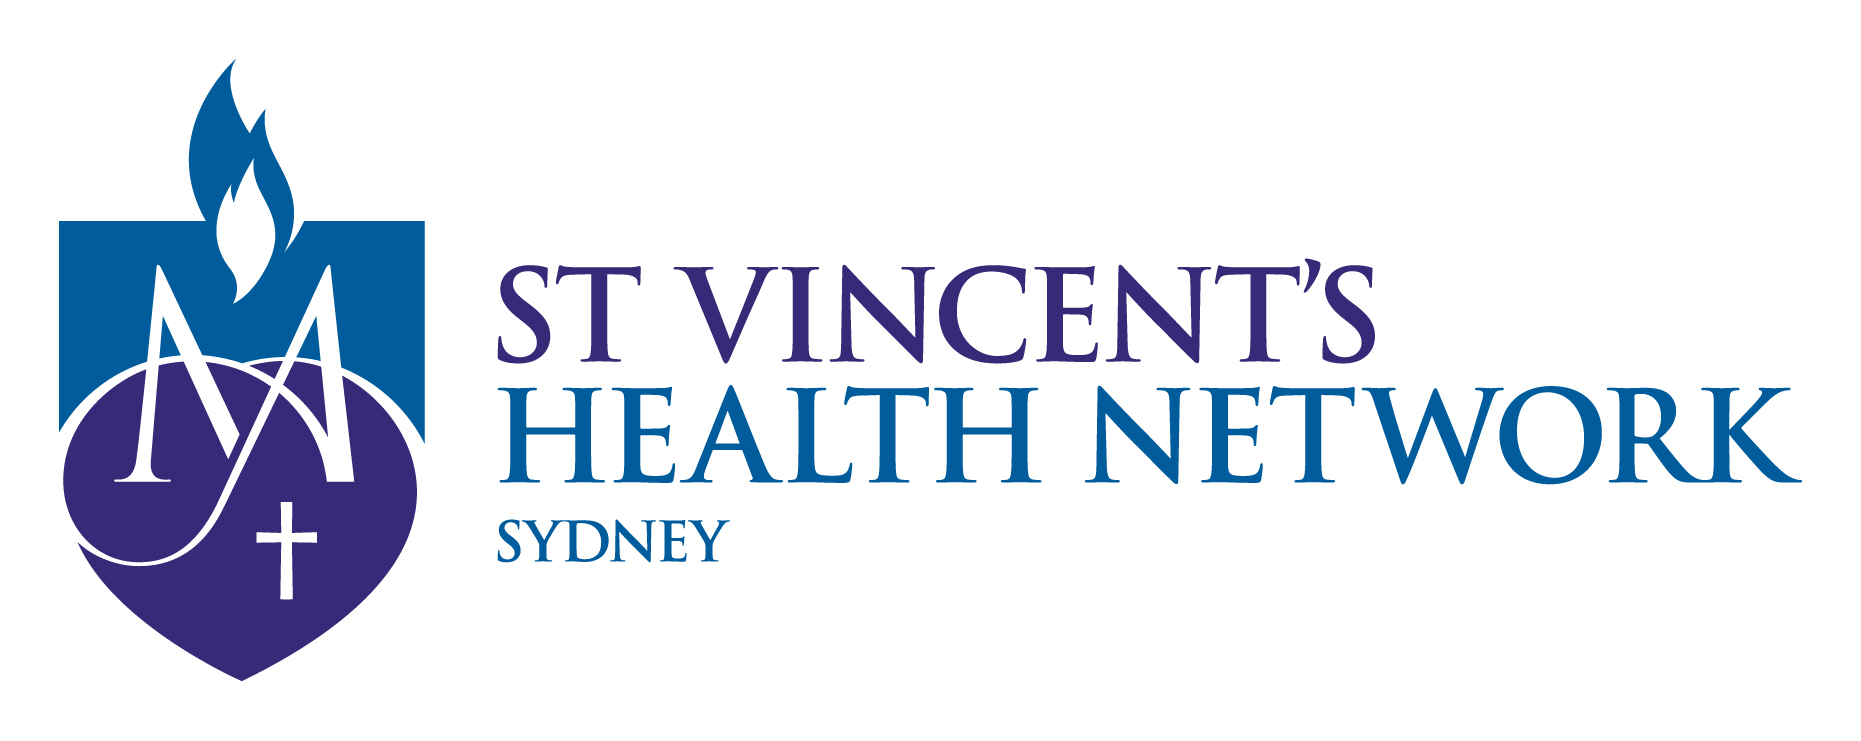 St Vincent's Health Network Sydney logo